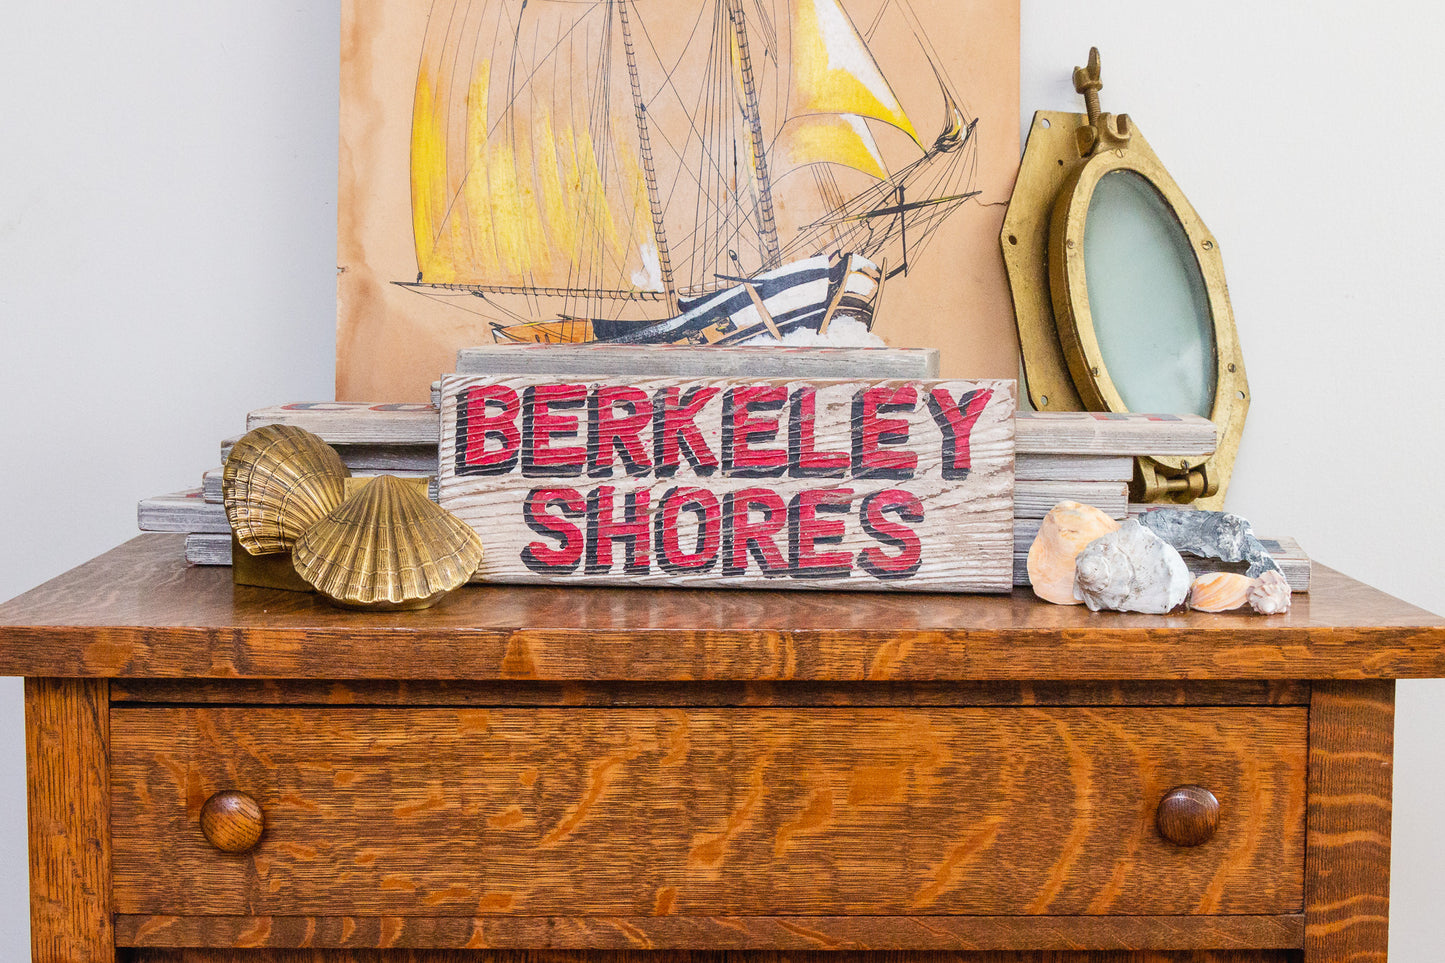 Berkeley Shores Bayville New Jersey Vintage Painted Wood Sign | Coastal Decor